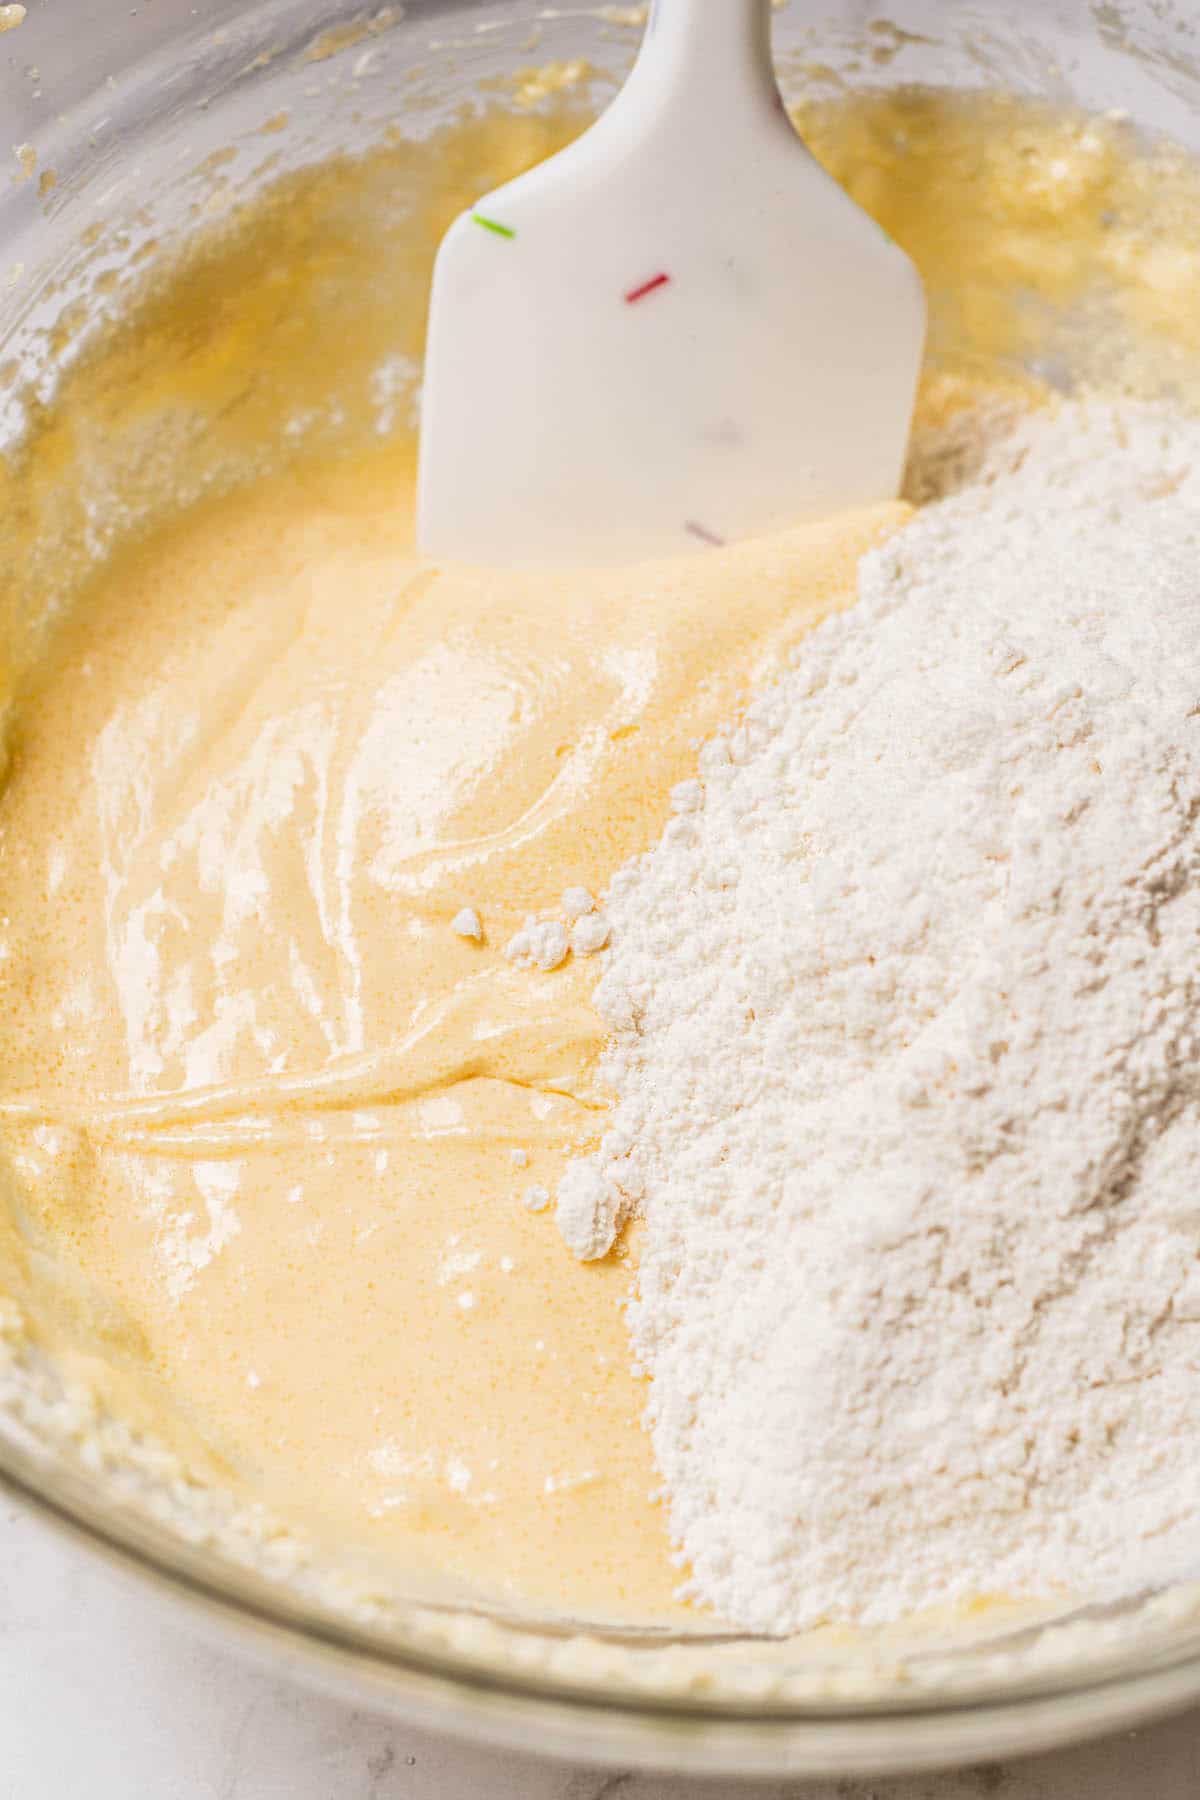 flour in cake mix.